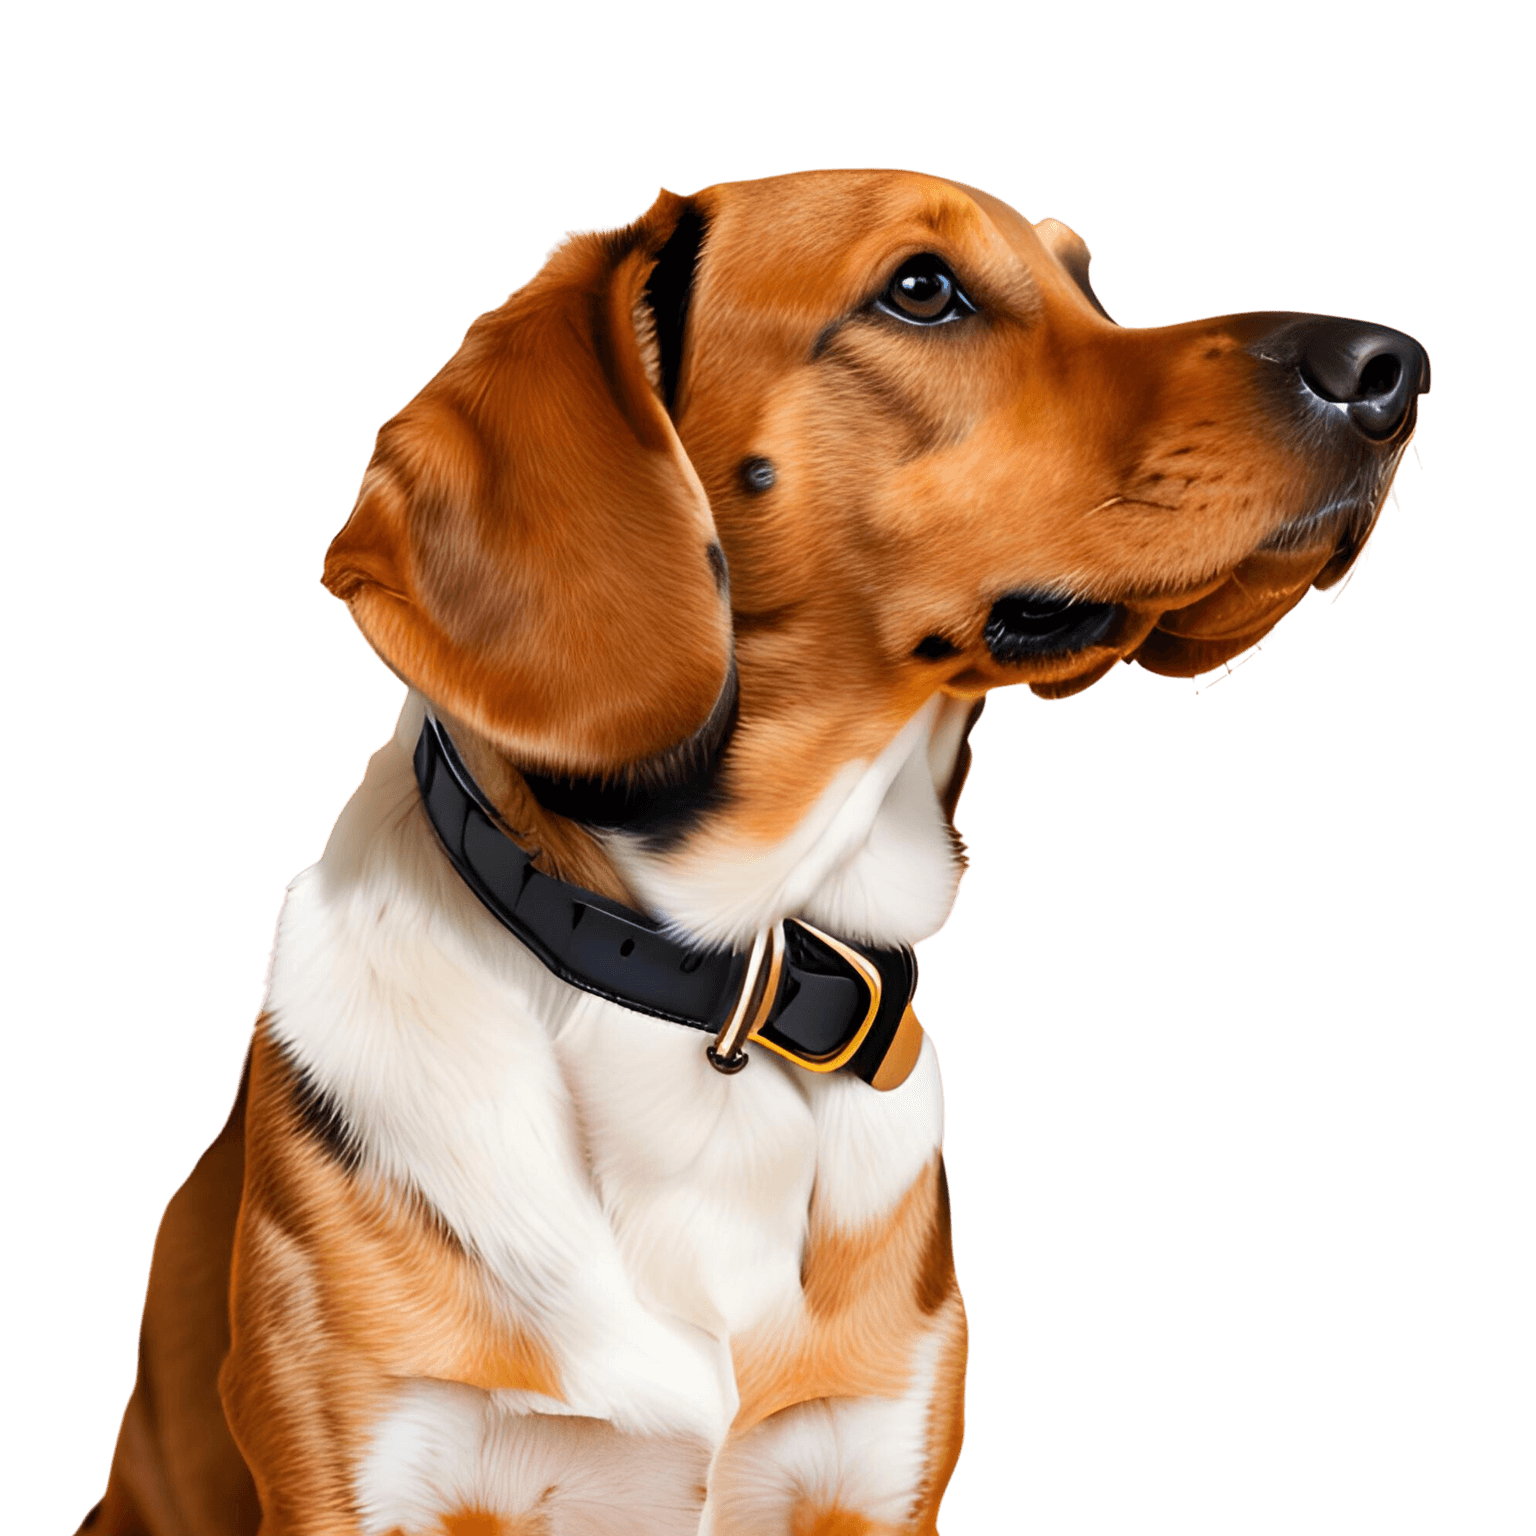 Dog,carnivore,dog breed,collar,working animal,whiskers,fawn,companion dog,dog collar,dog accessories,